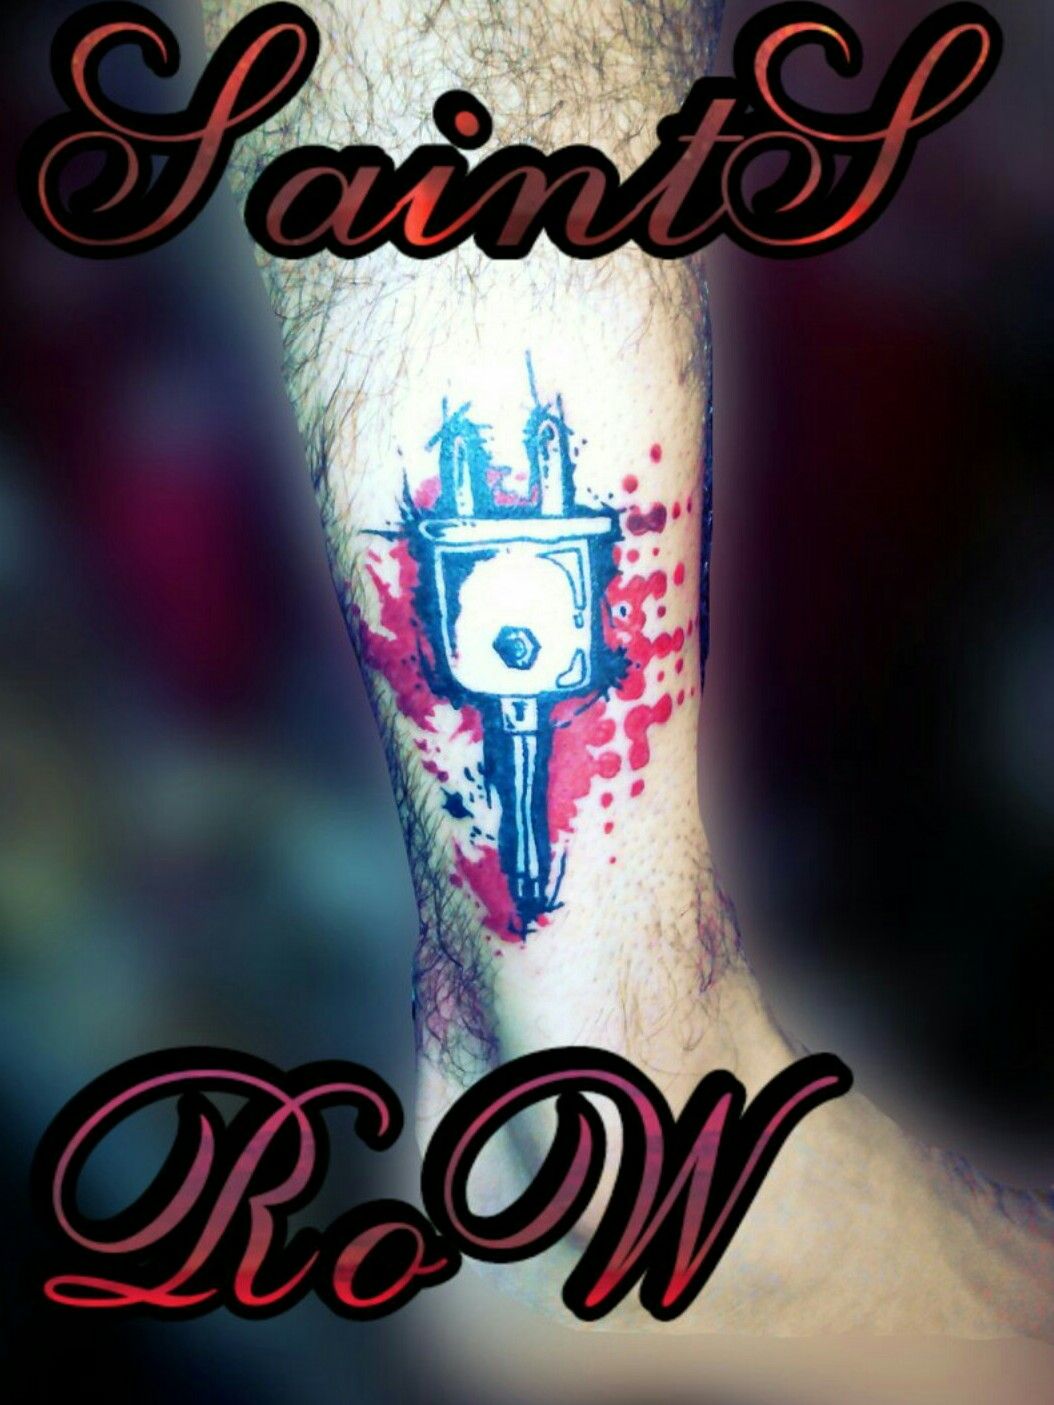 Share 69 saints row tattoo super hot  incdgdbentre